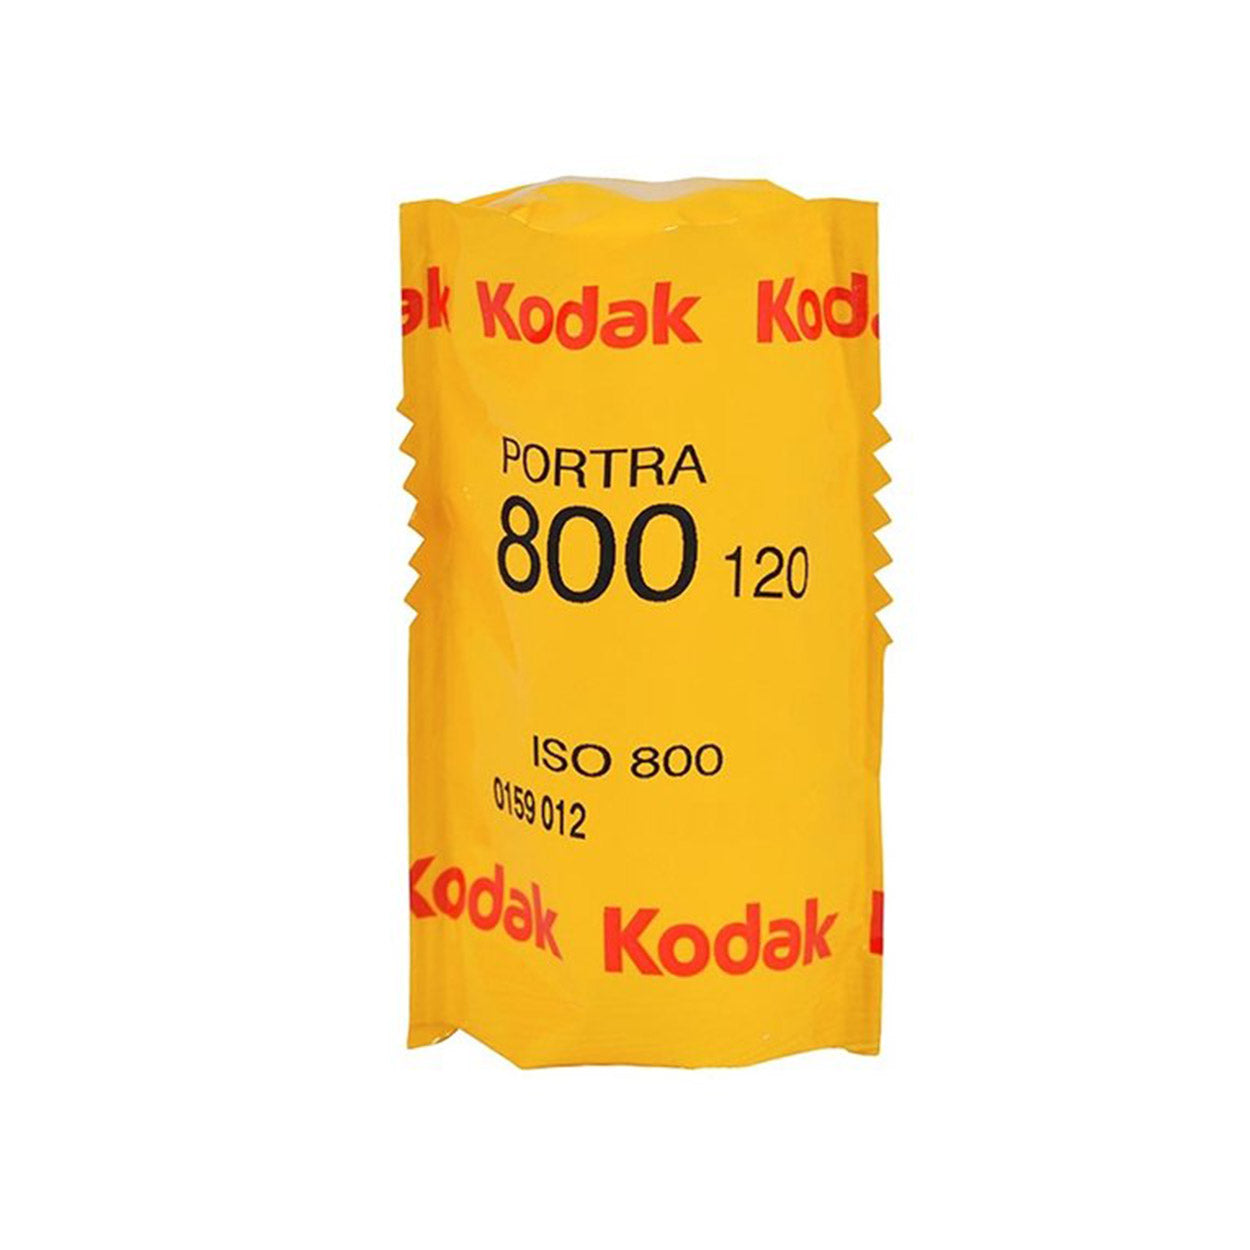 KODAK Portra 800 (120 5-pack)